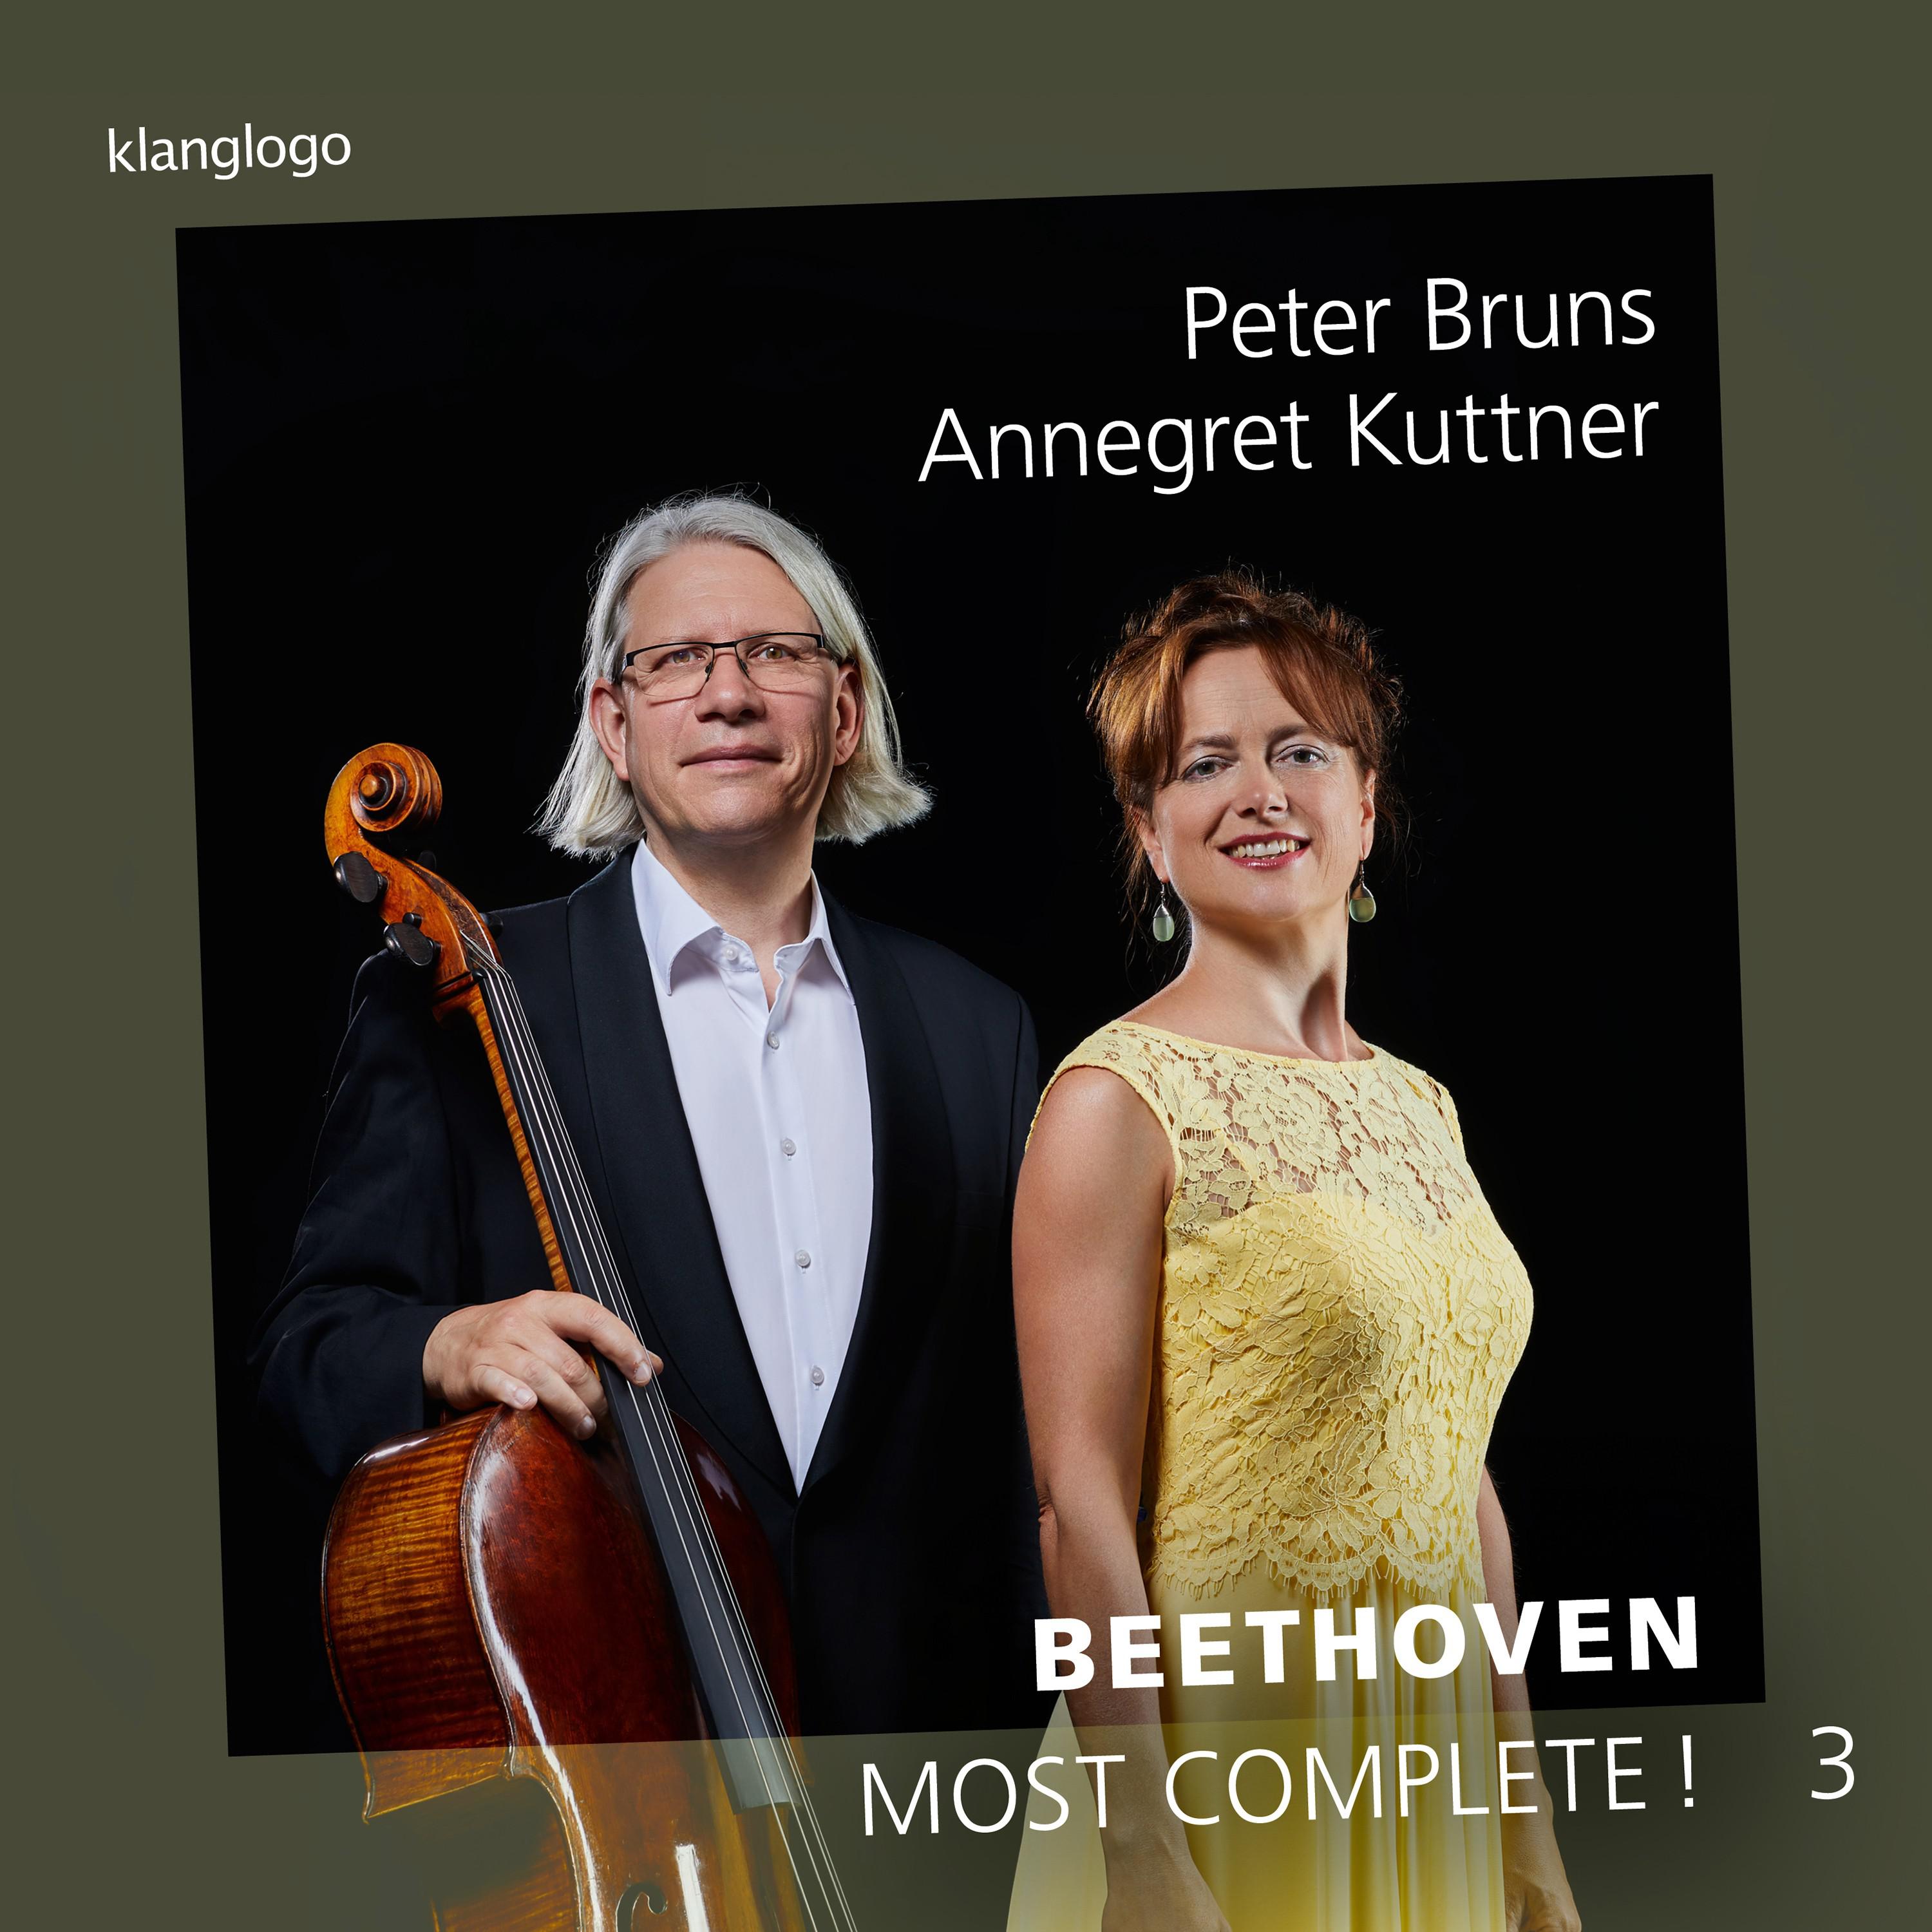 Peter Bruns - 2. Adagio - Tampo d'Andante - Allegro vivace